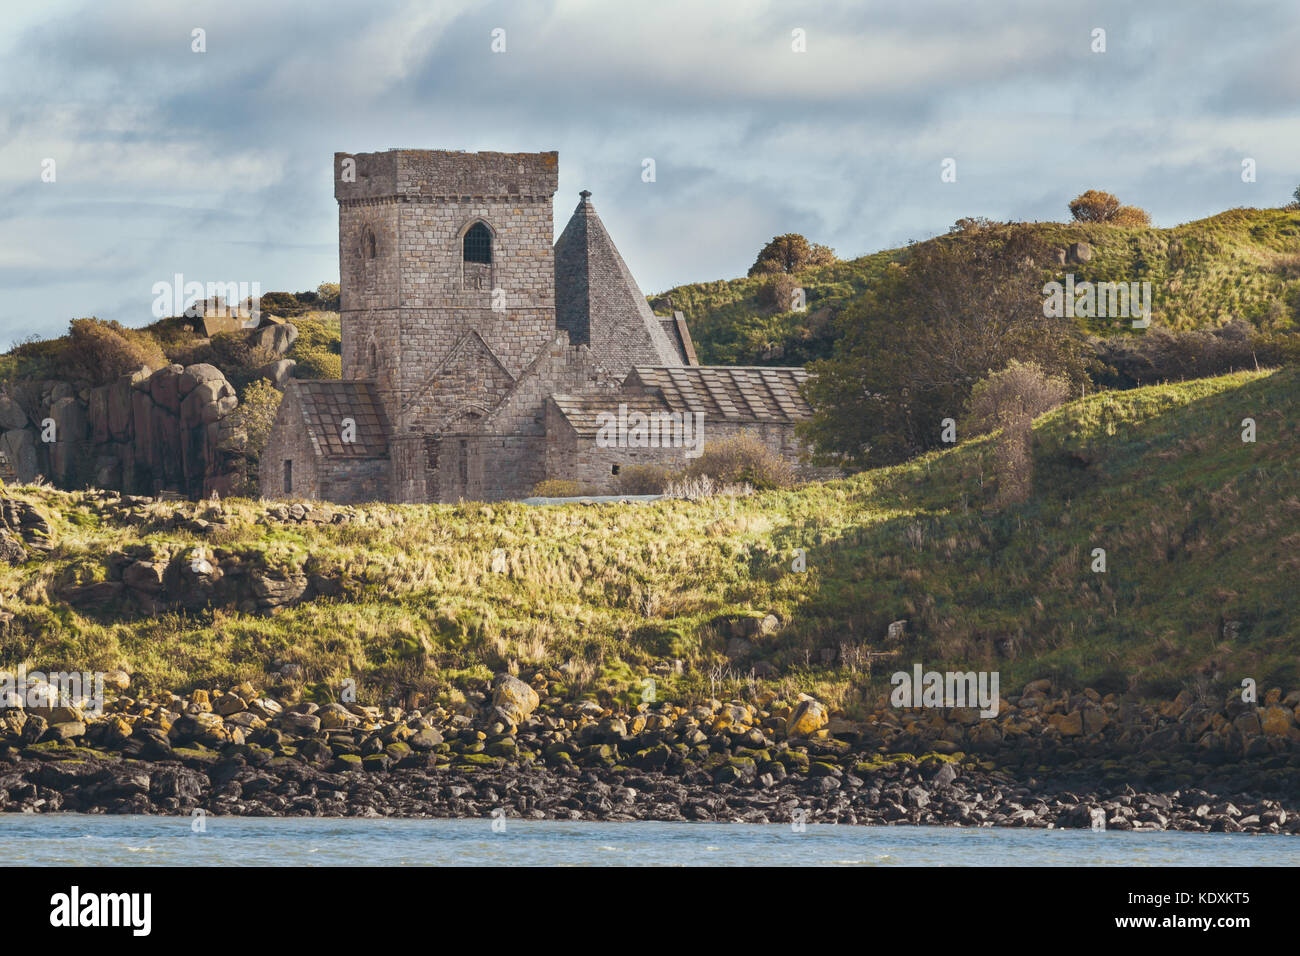 Ruins of an old castle in Scotland - inchcolm island, Edinburgh Stock Photo  - Alamy